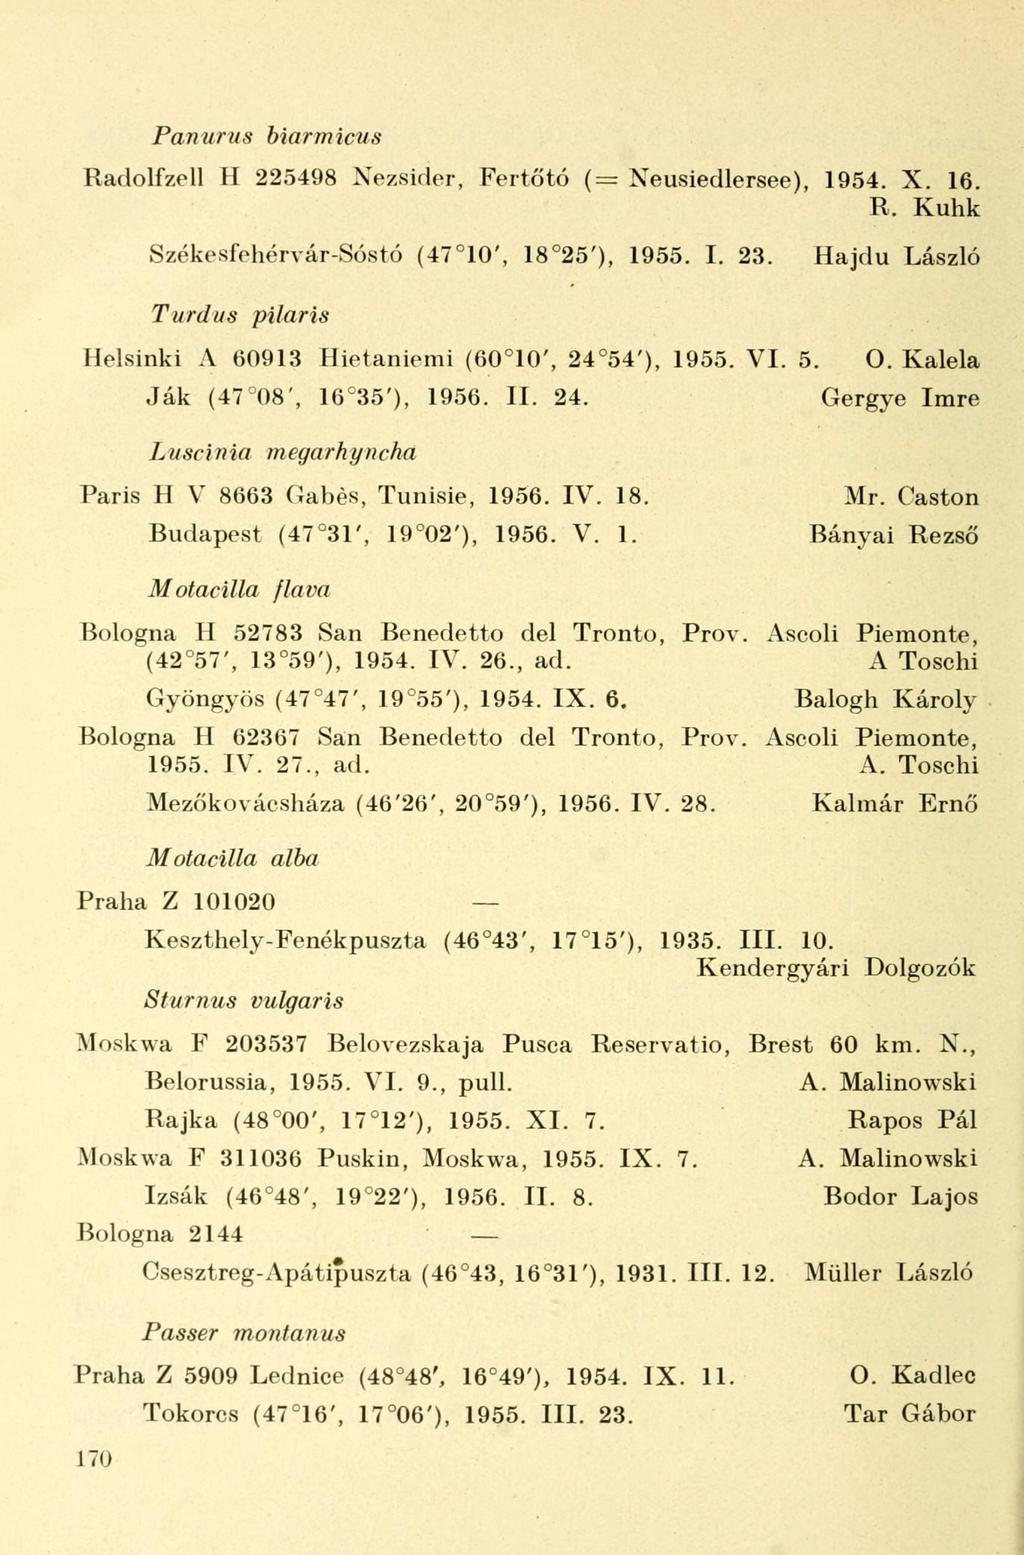 Panurus biarmicus Radolfzell H 225498 Nezsider, Fertőtó (= Neusiedlersee), 1954. X. 16. R. Kuhk Székesfehérvár-Sóstó (47 10', 18 25'), 1955. I. 23.